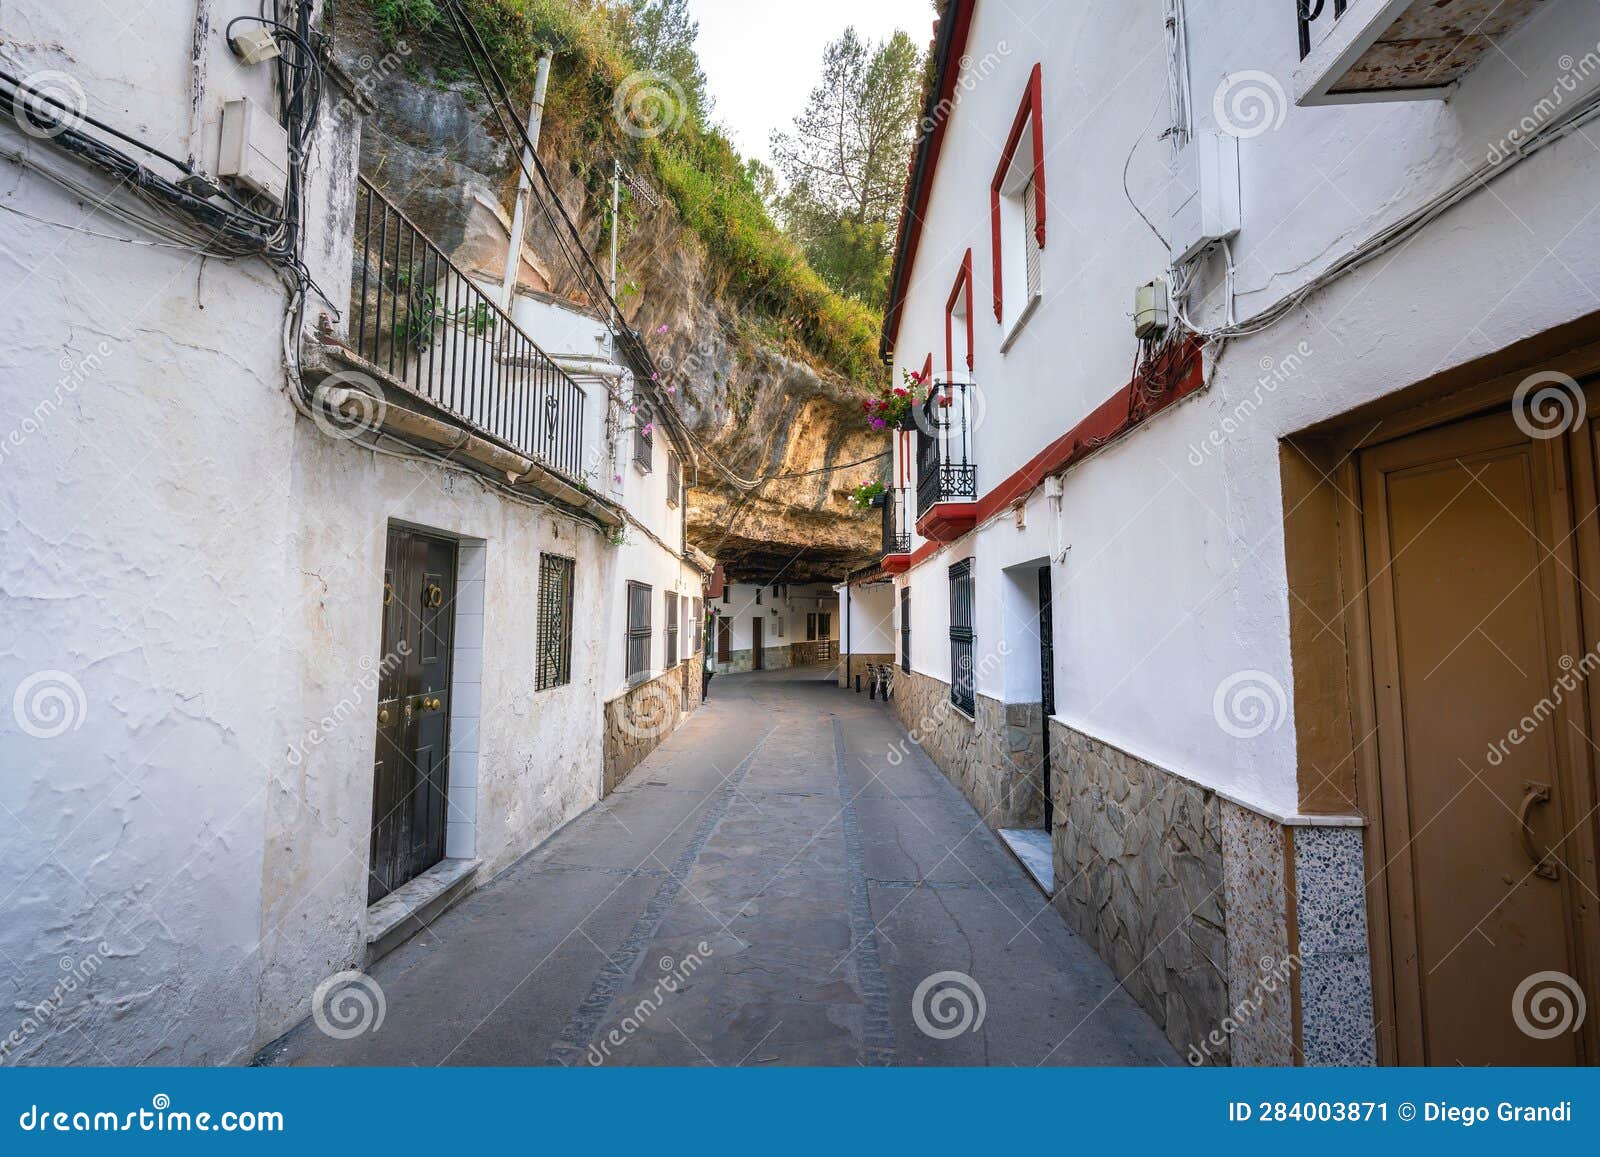 calle cuevas de la sombra street - setenil de las bodegas, andalusia, spain